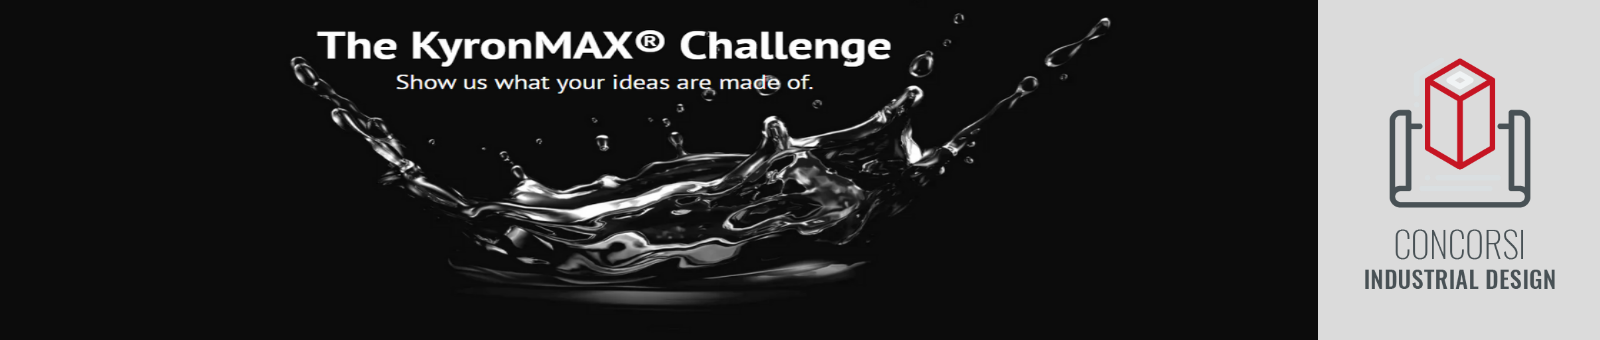 Mitsubishi Chemical Advanced Material KyronMax Challenge